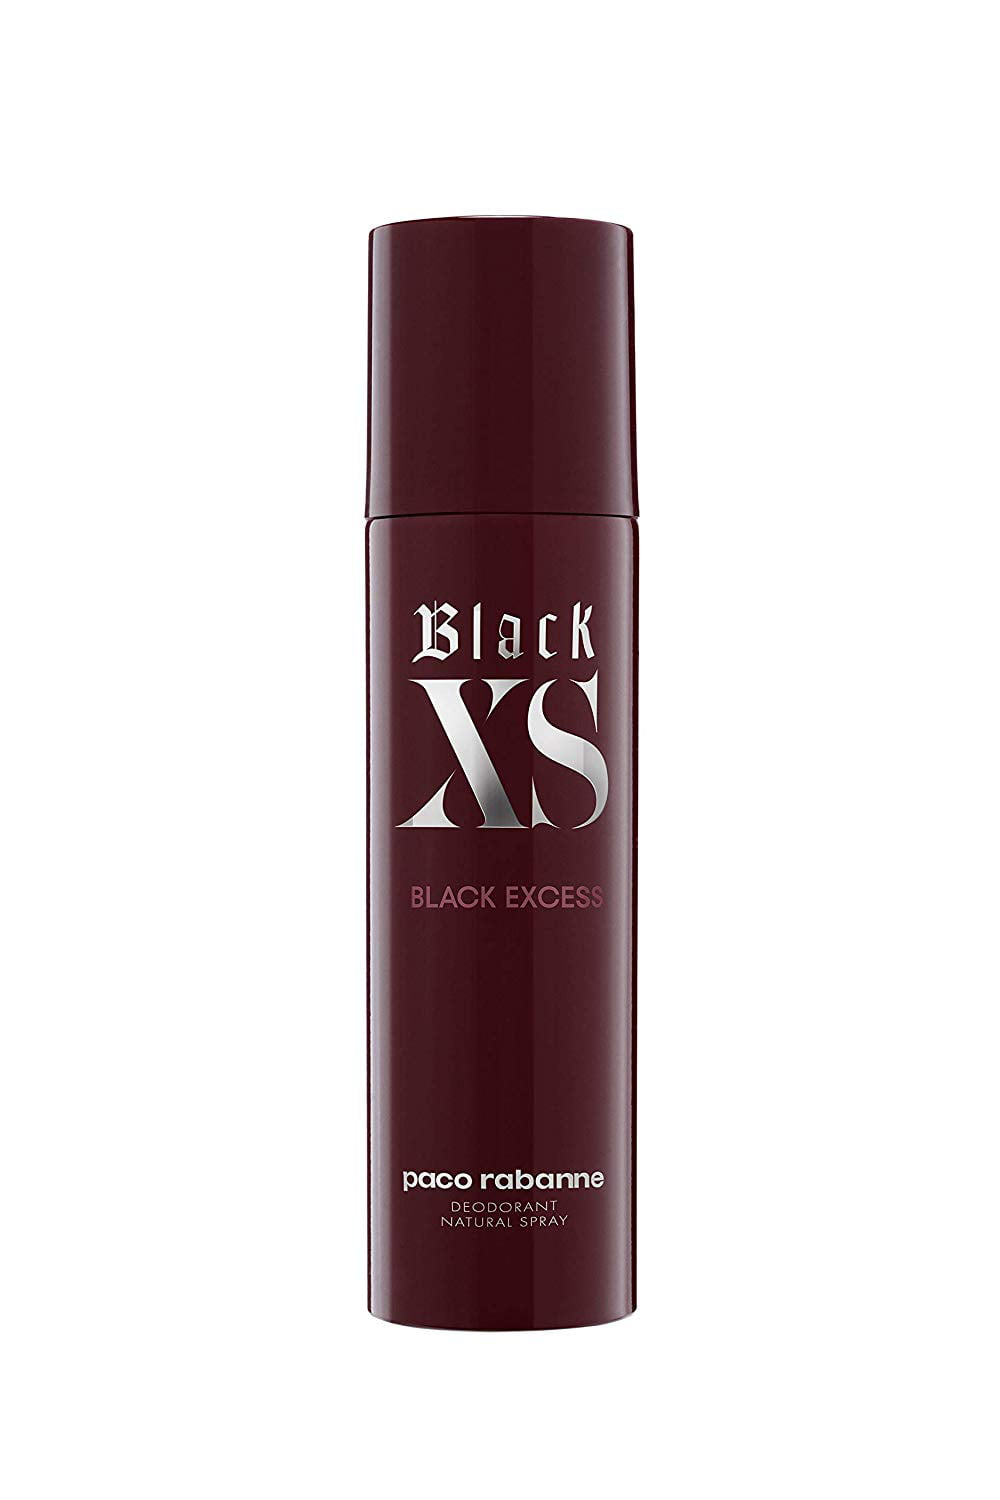 det er smukt for mig Selv tak Paco Rabanne Black XS for Her Deodorant Spray, 5.1oz / 150ml - Walmart.com